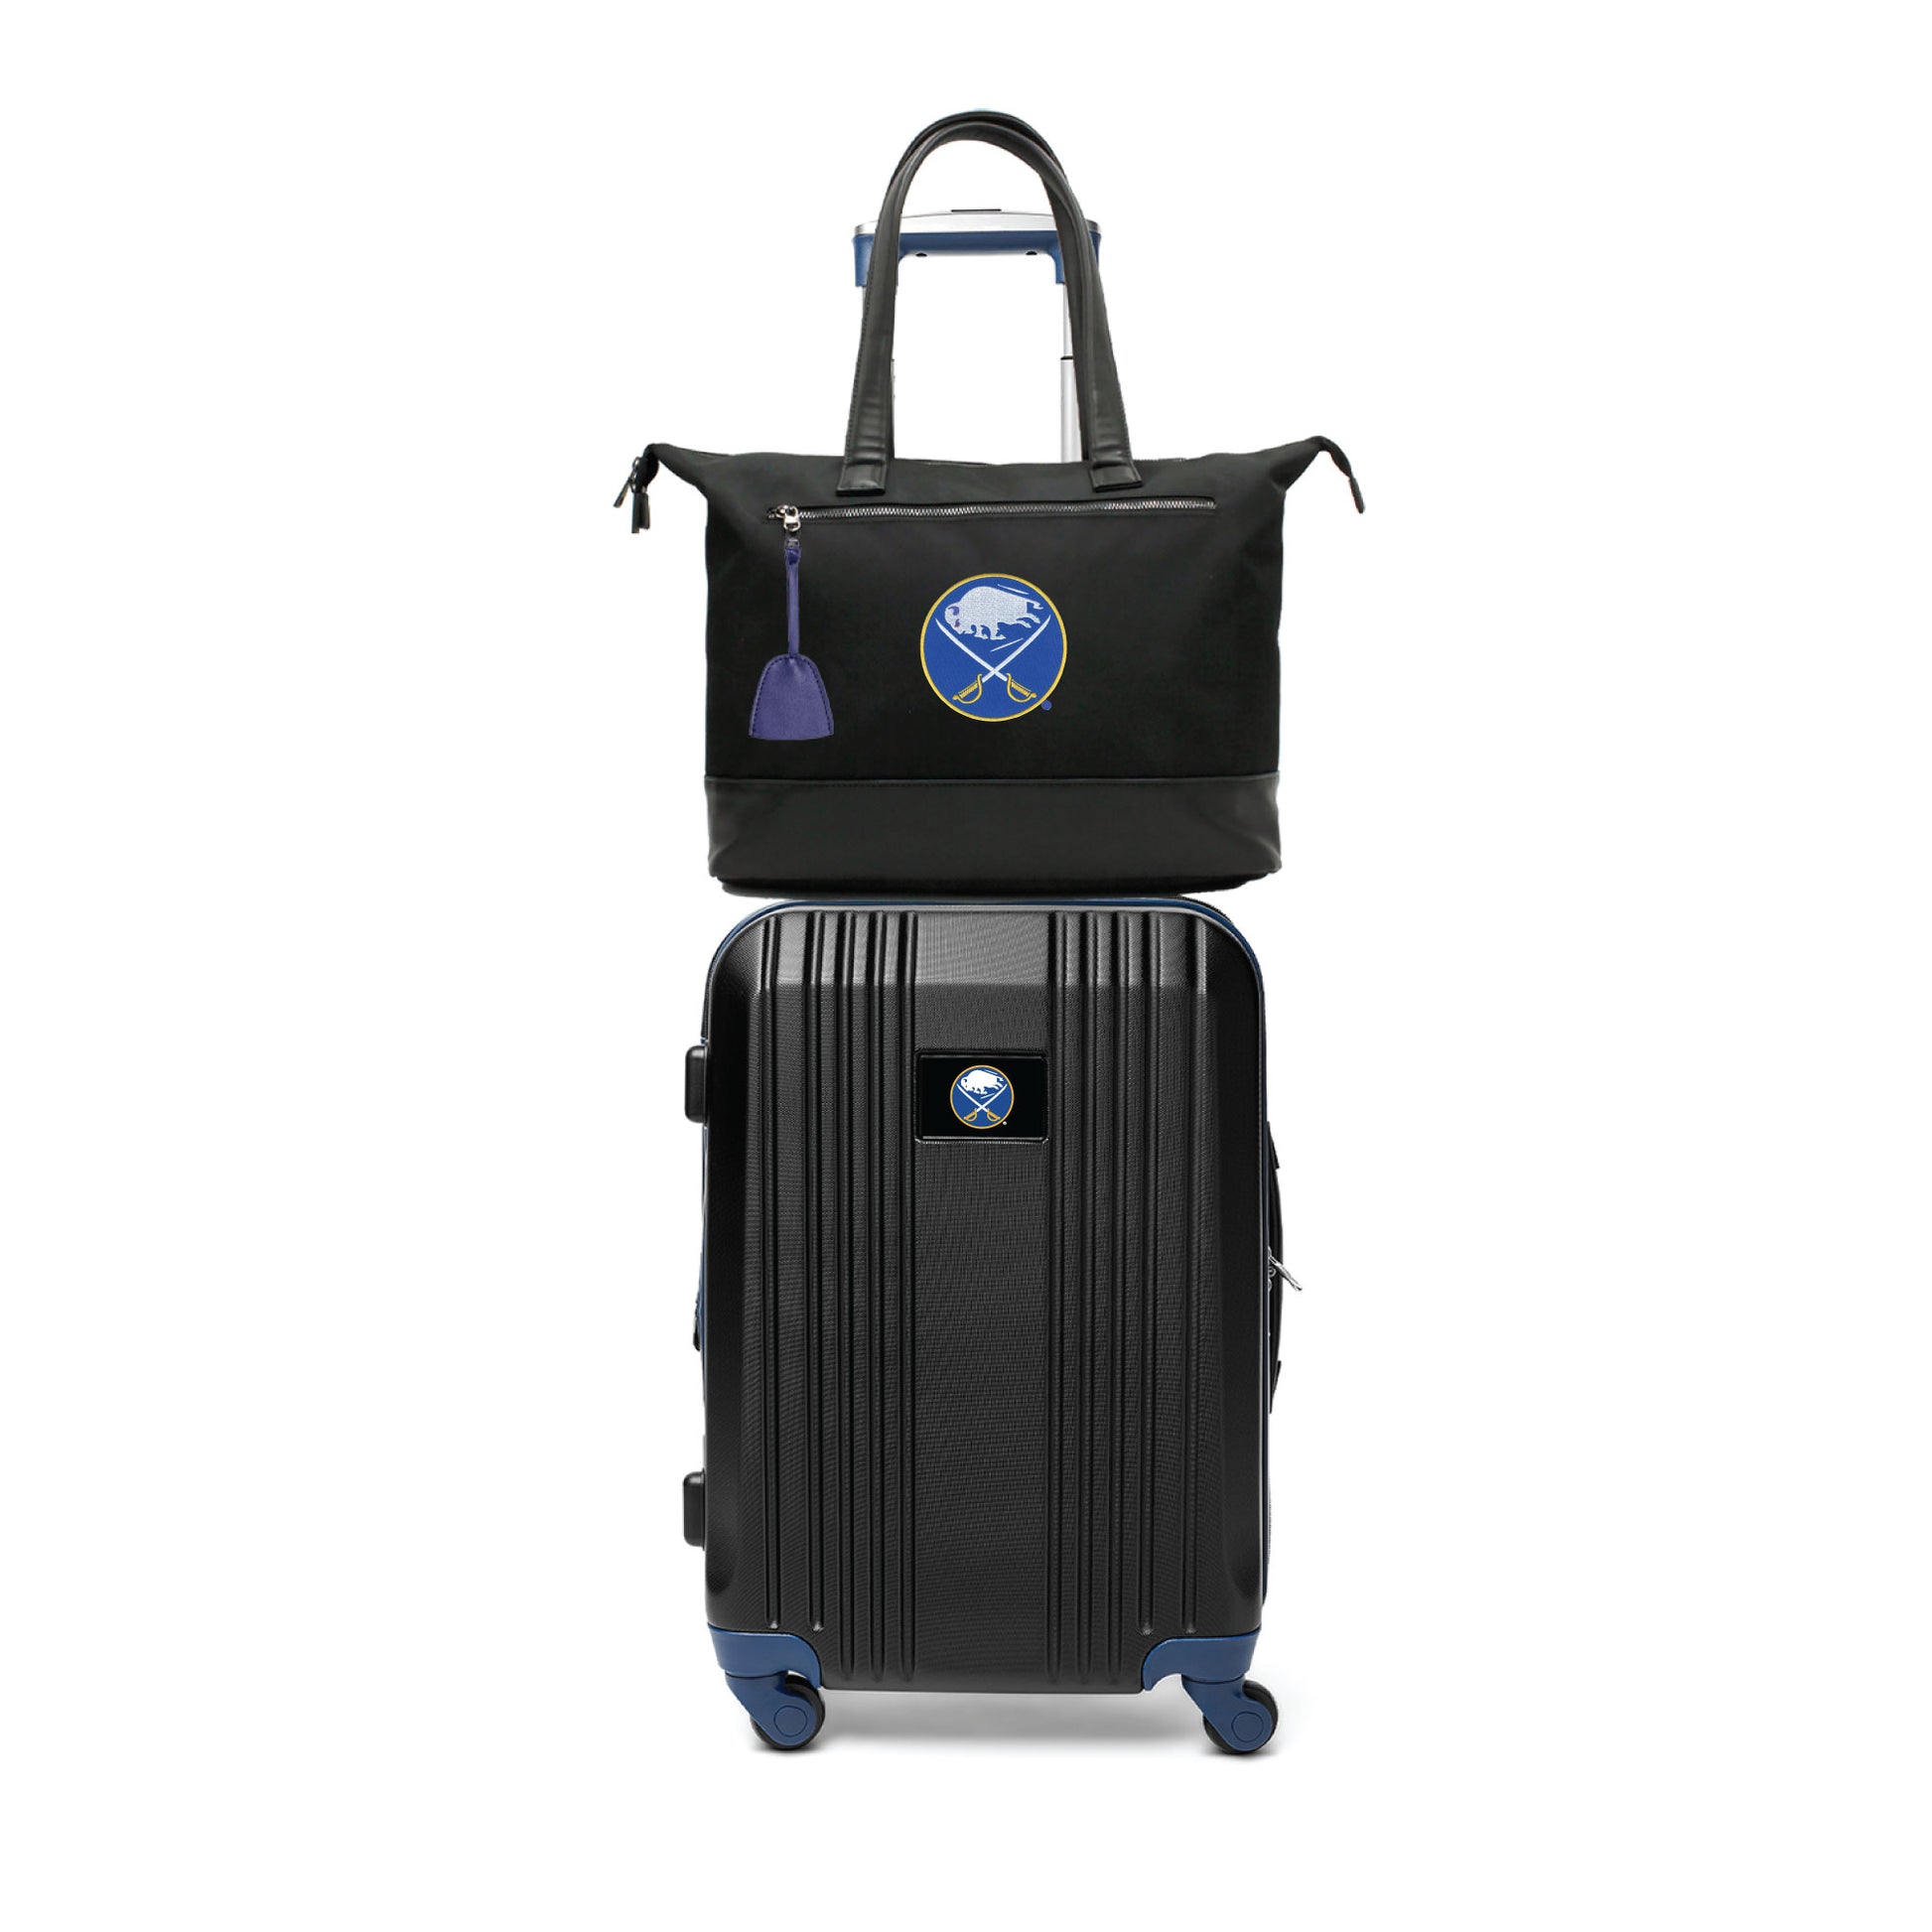 Buffalo Sabres Premium Laptop Tote Bag and Luggage Set